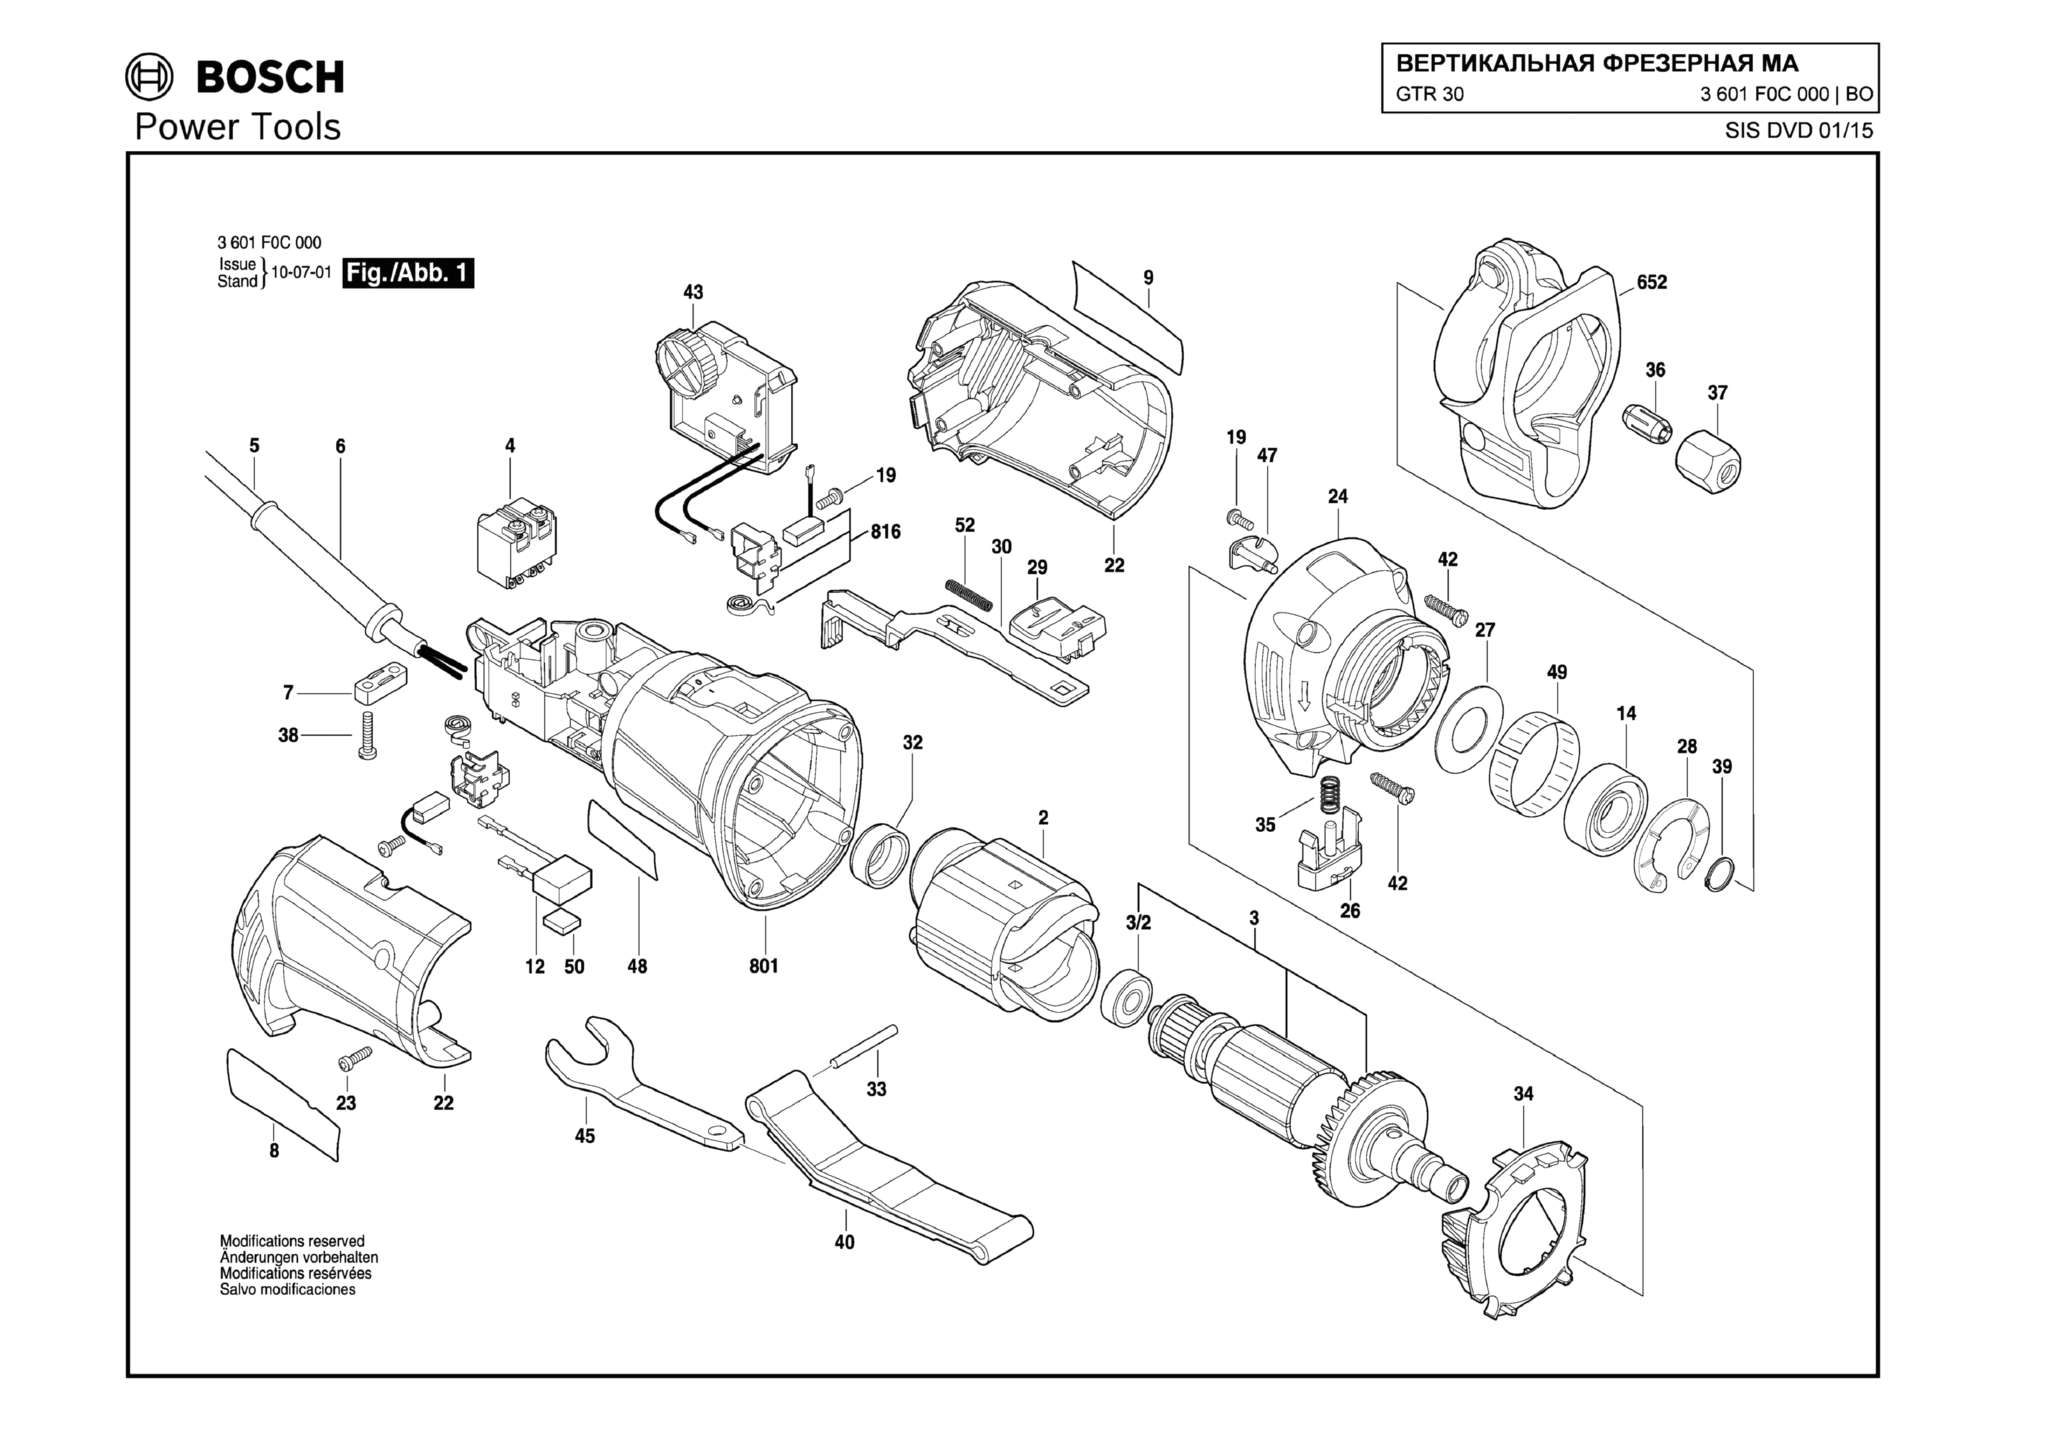 Запчасти, схема и деталировка Bosch GTR 30 (ТИП 3601F0C000)